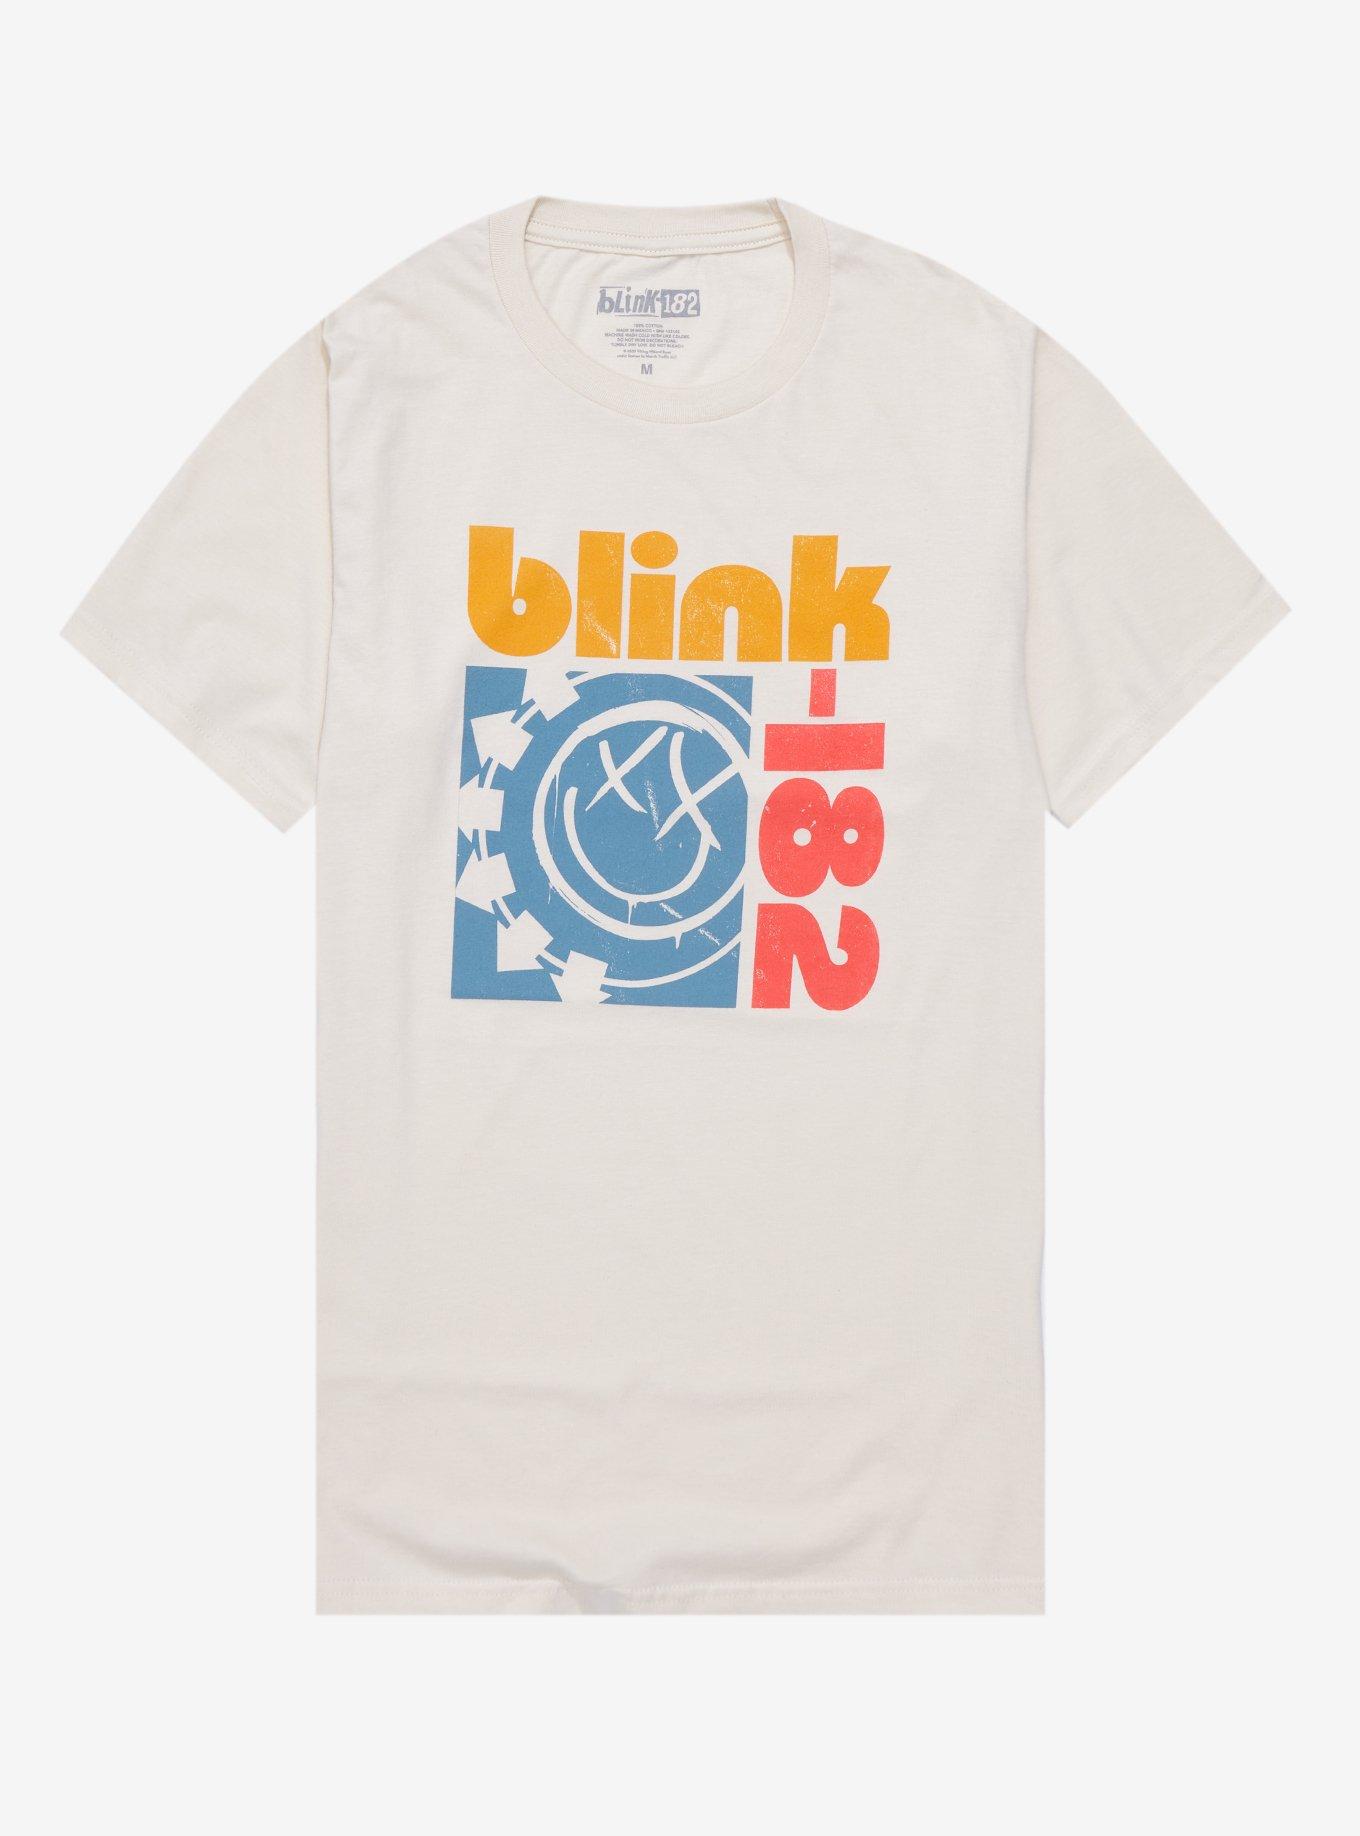 Blink-182 Bright Logo Boyfriend Fit Girls T-Shirt, BRIGHT WHITE, hi-res